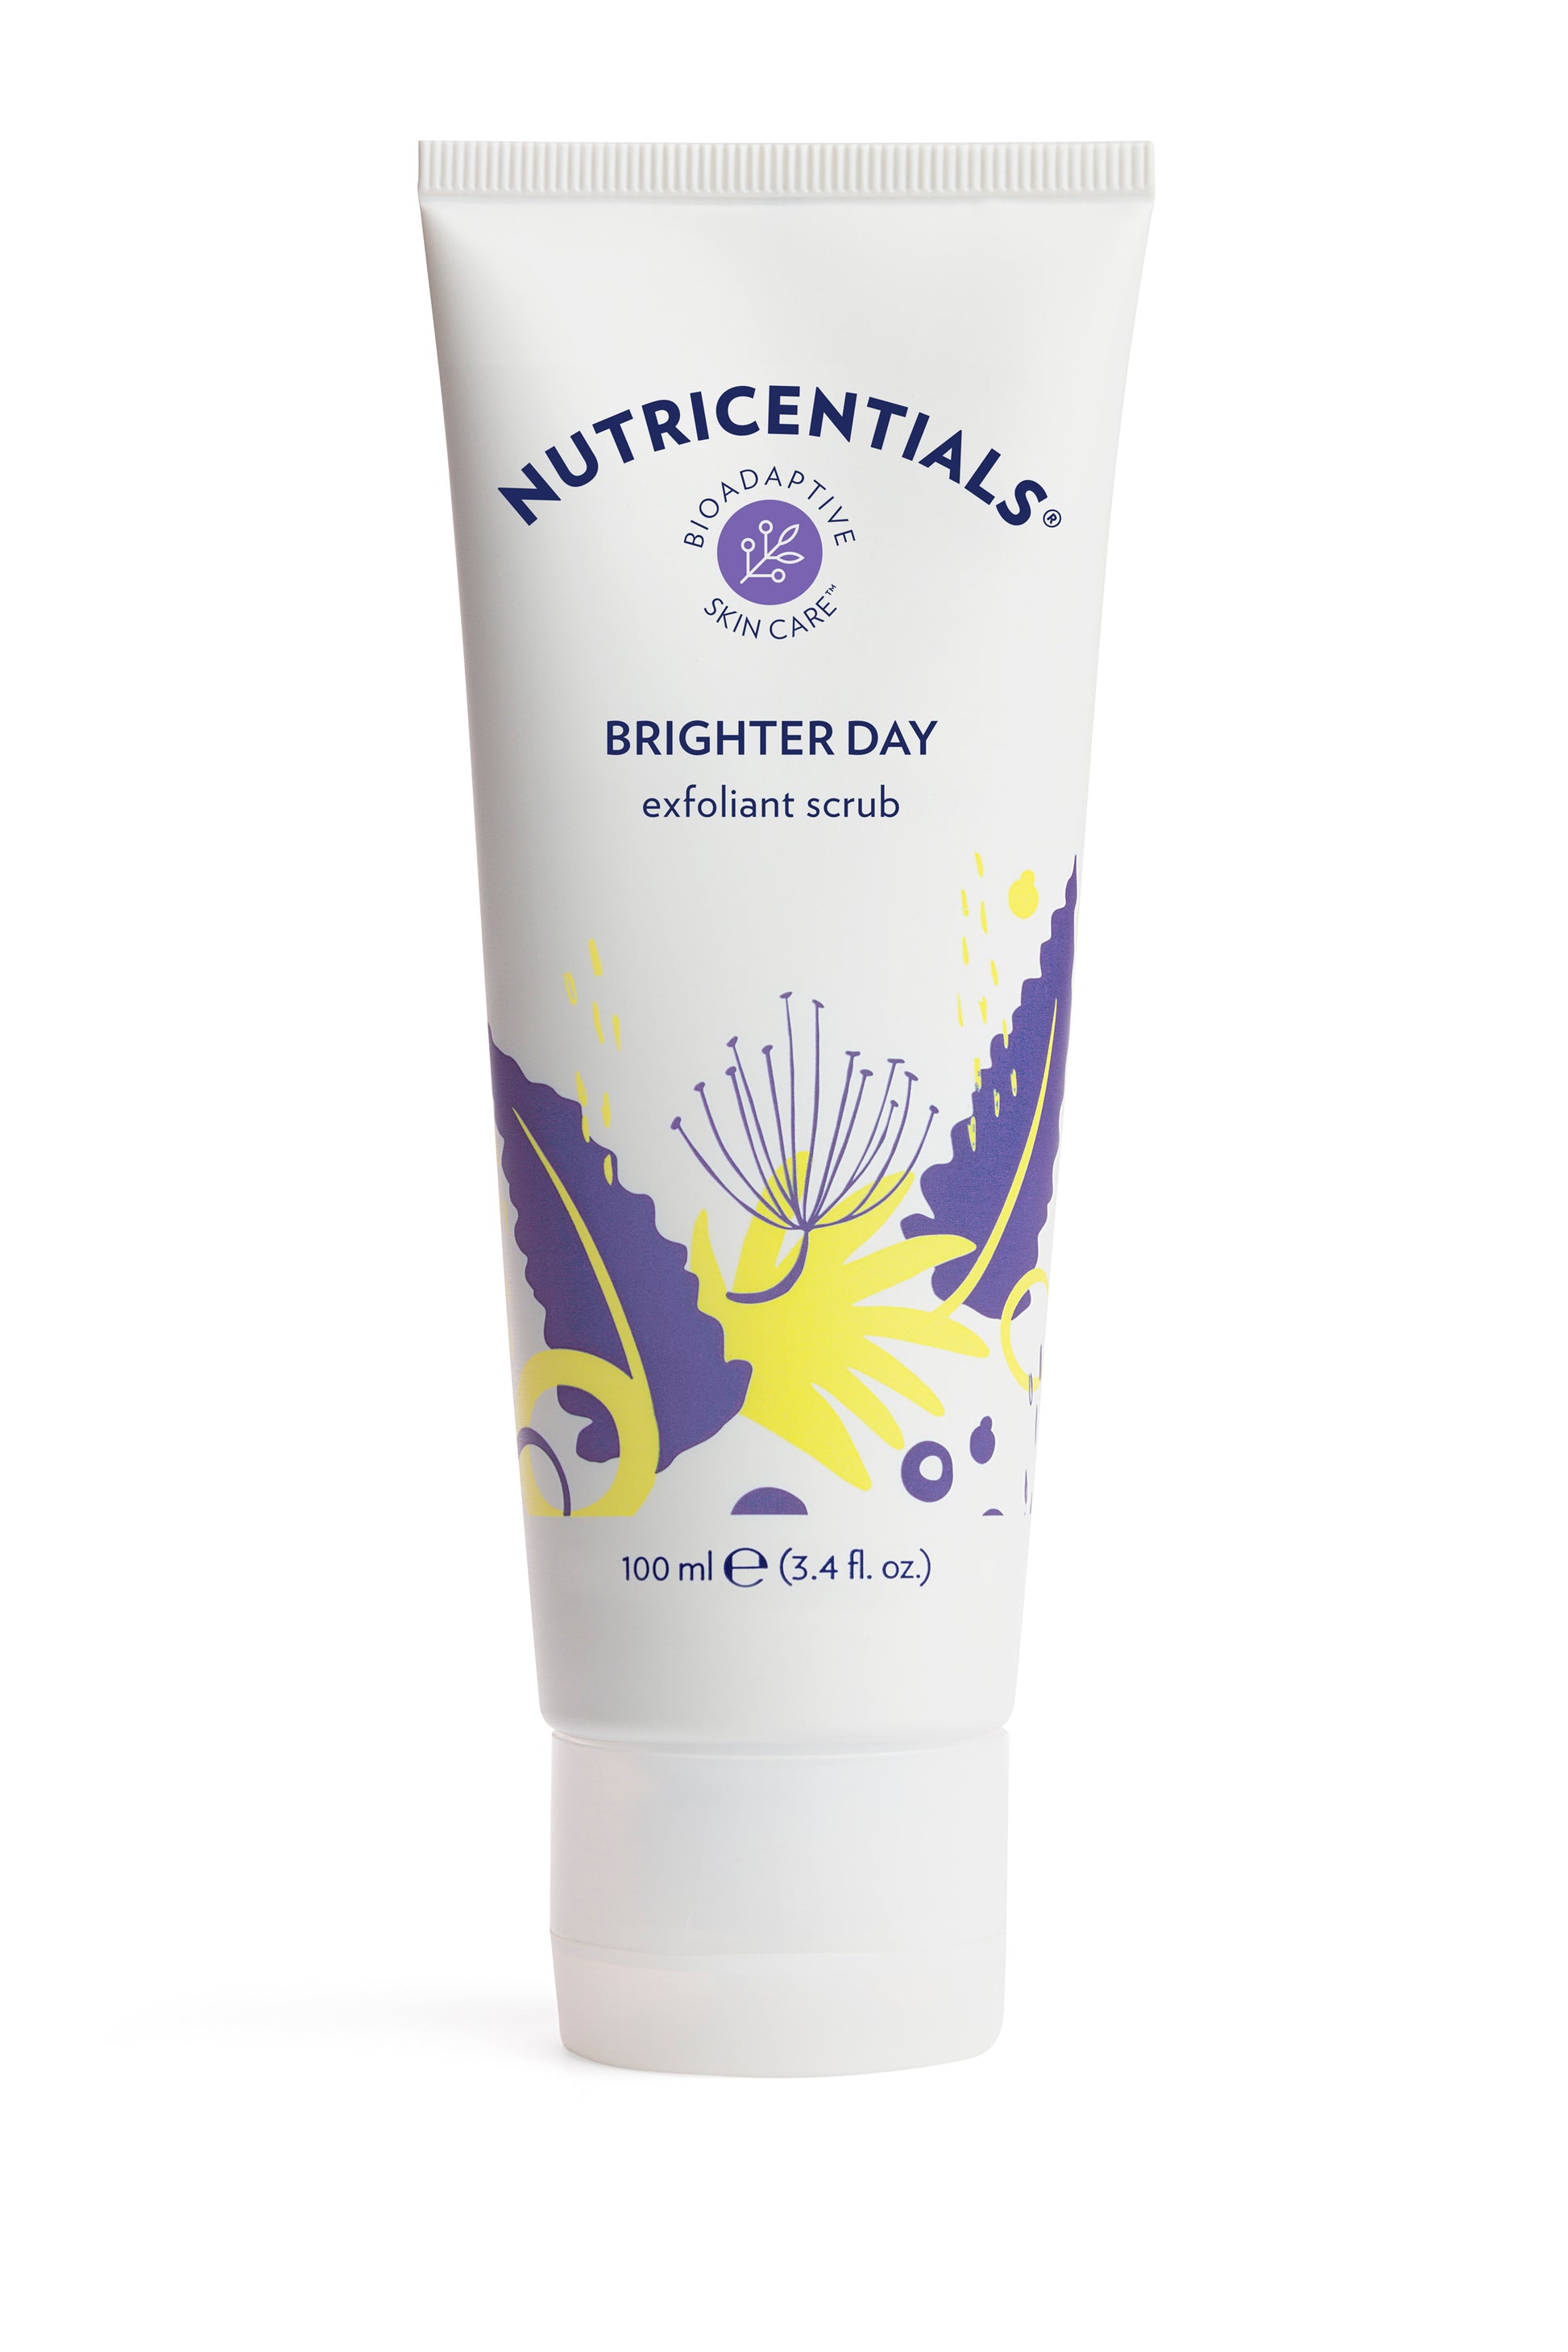 Nutricentials Brighter Day Exfoliant Scrub - 100ml - Beauty-Privée